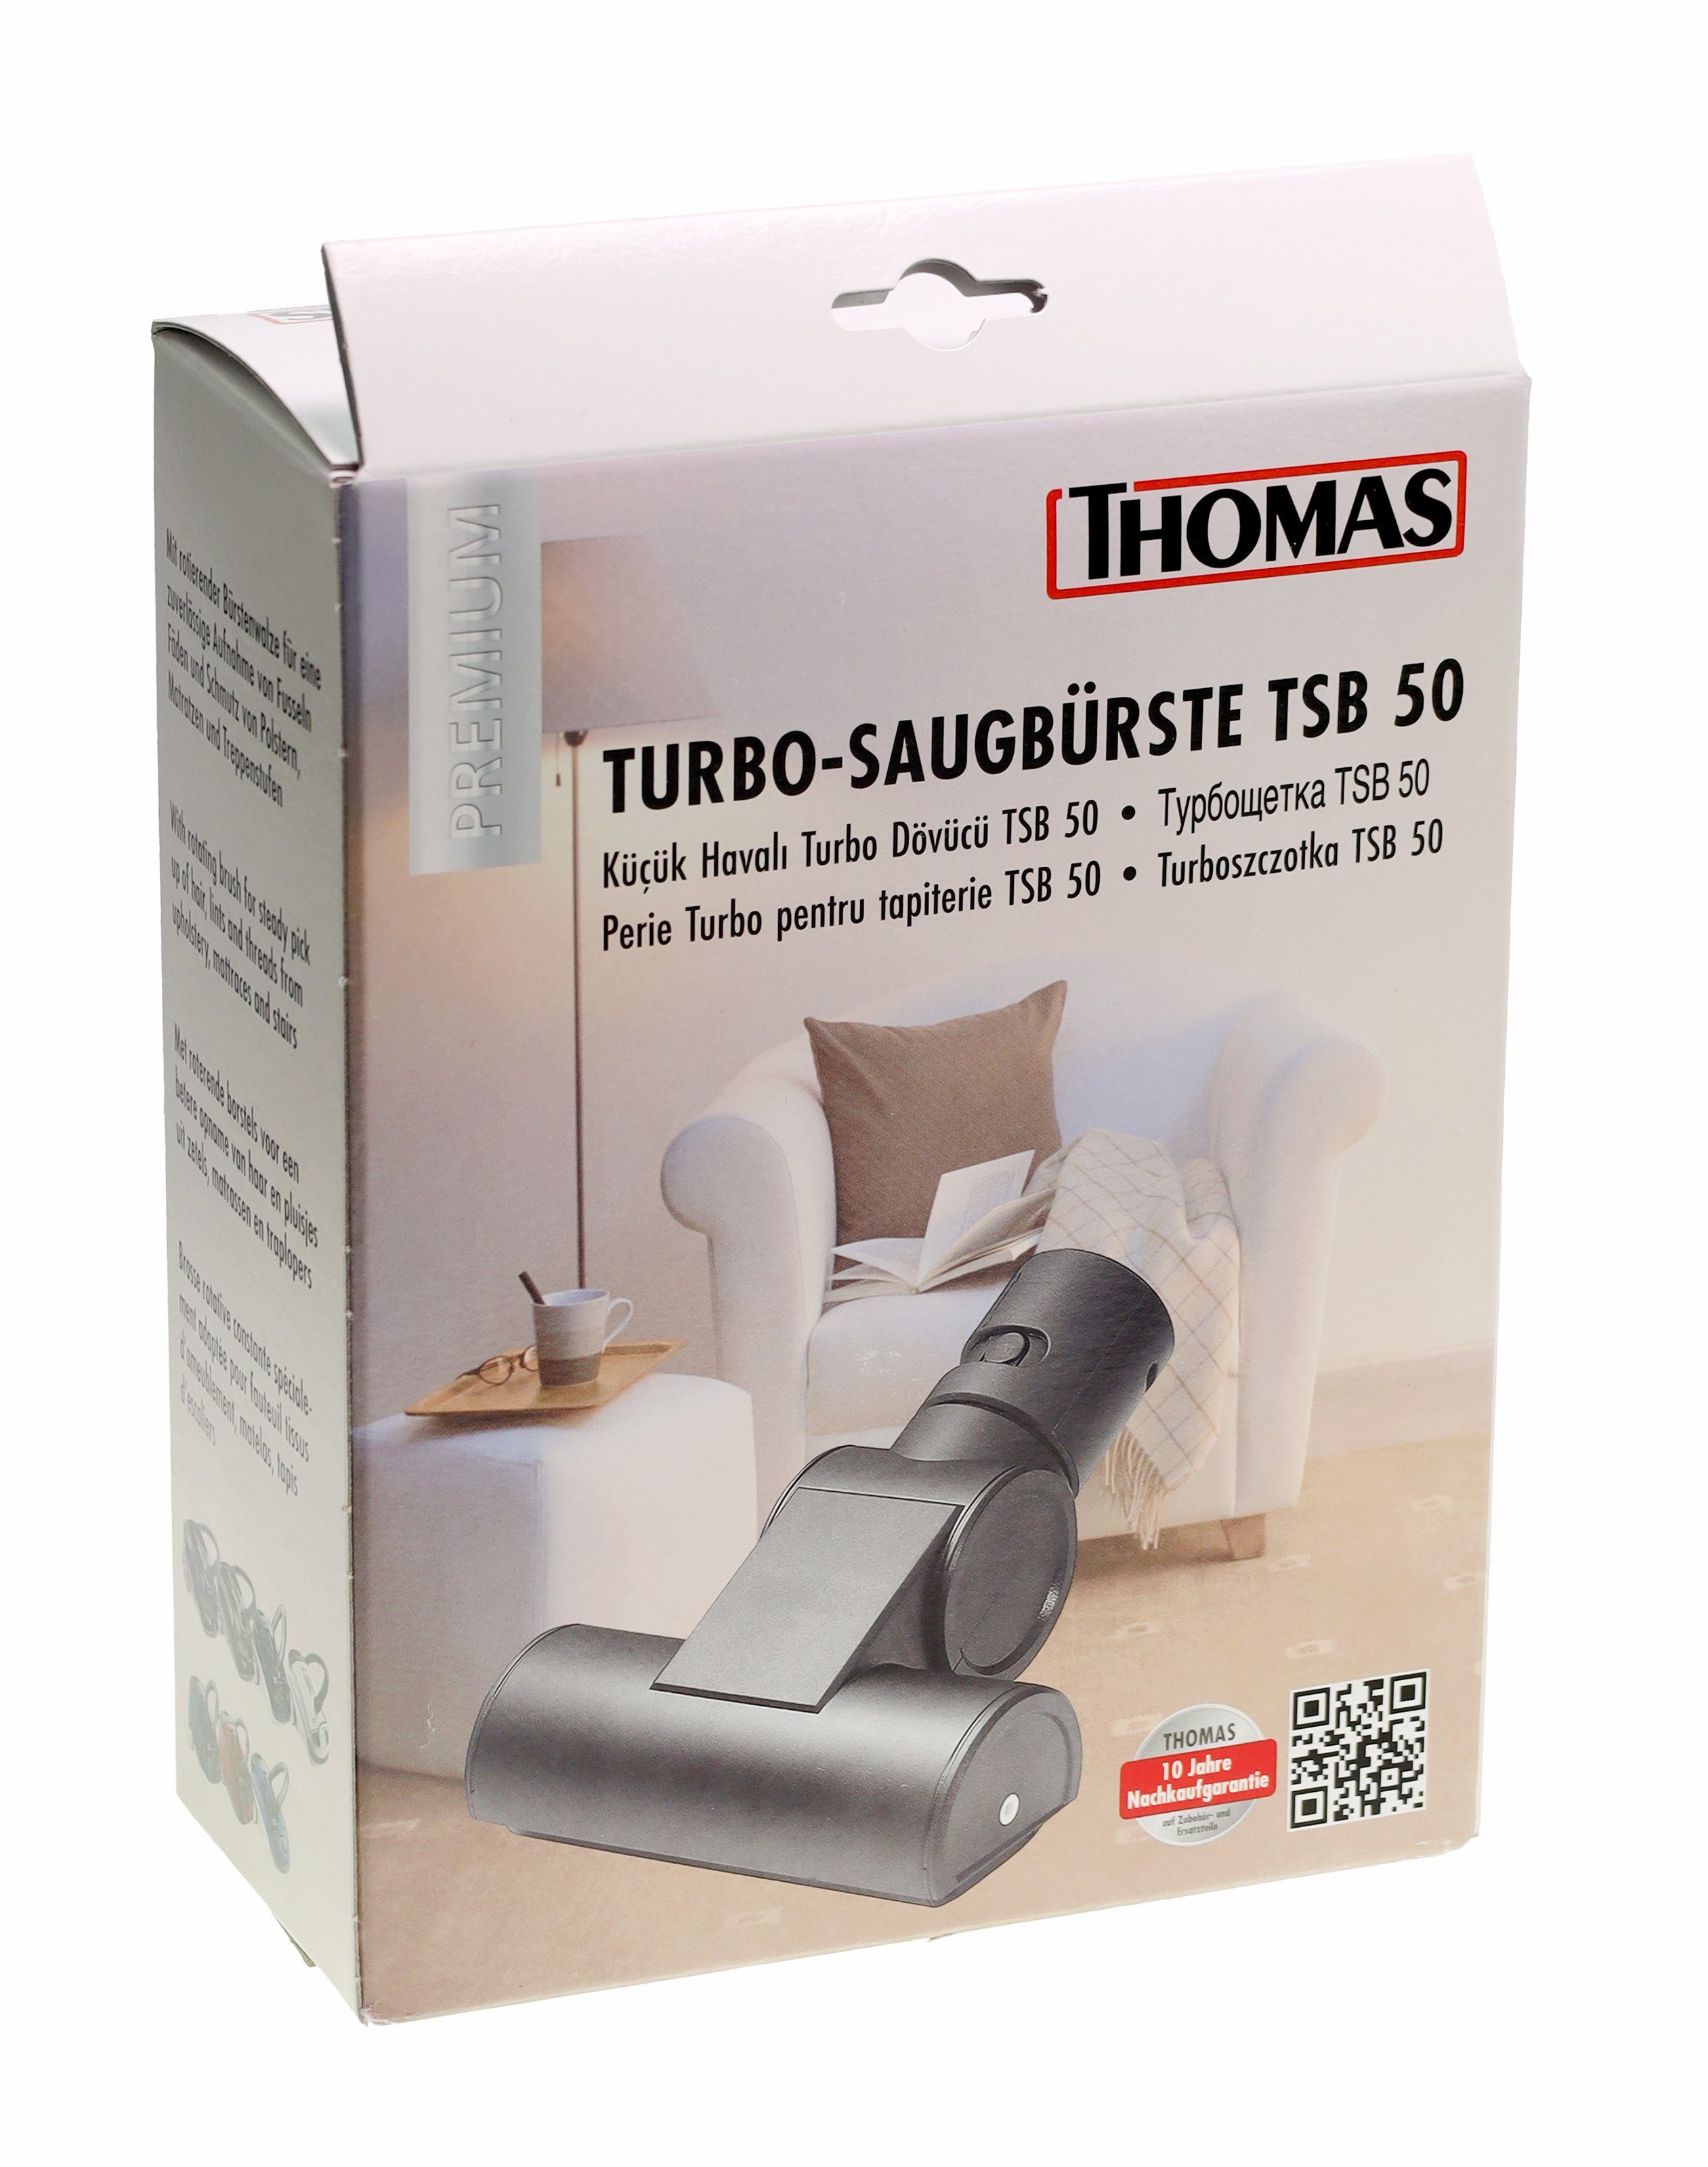 Polster-Turbodüse TSB50 787215 Staubsauger Bodendüse für Thomas Thomas